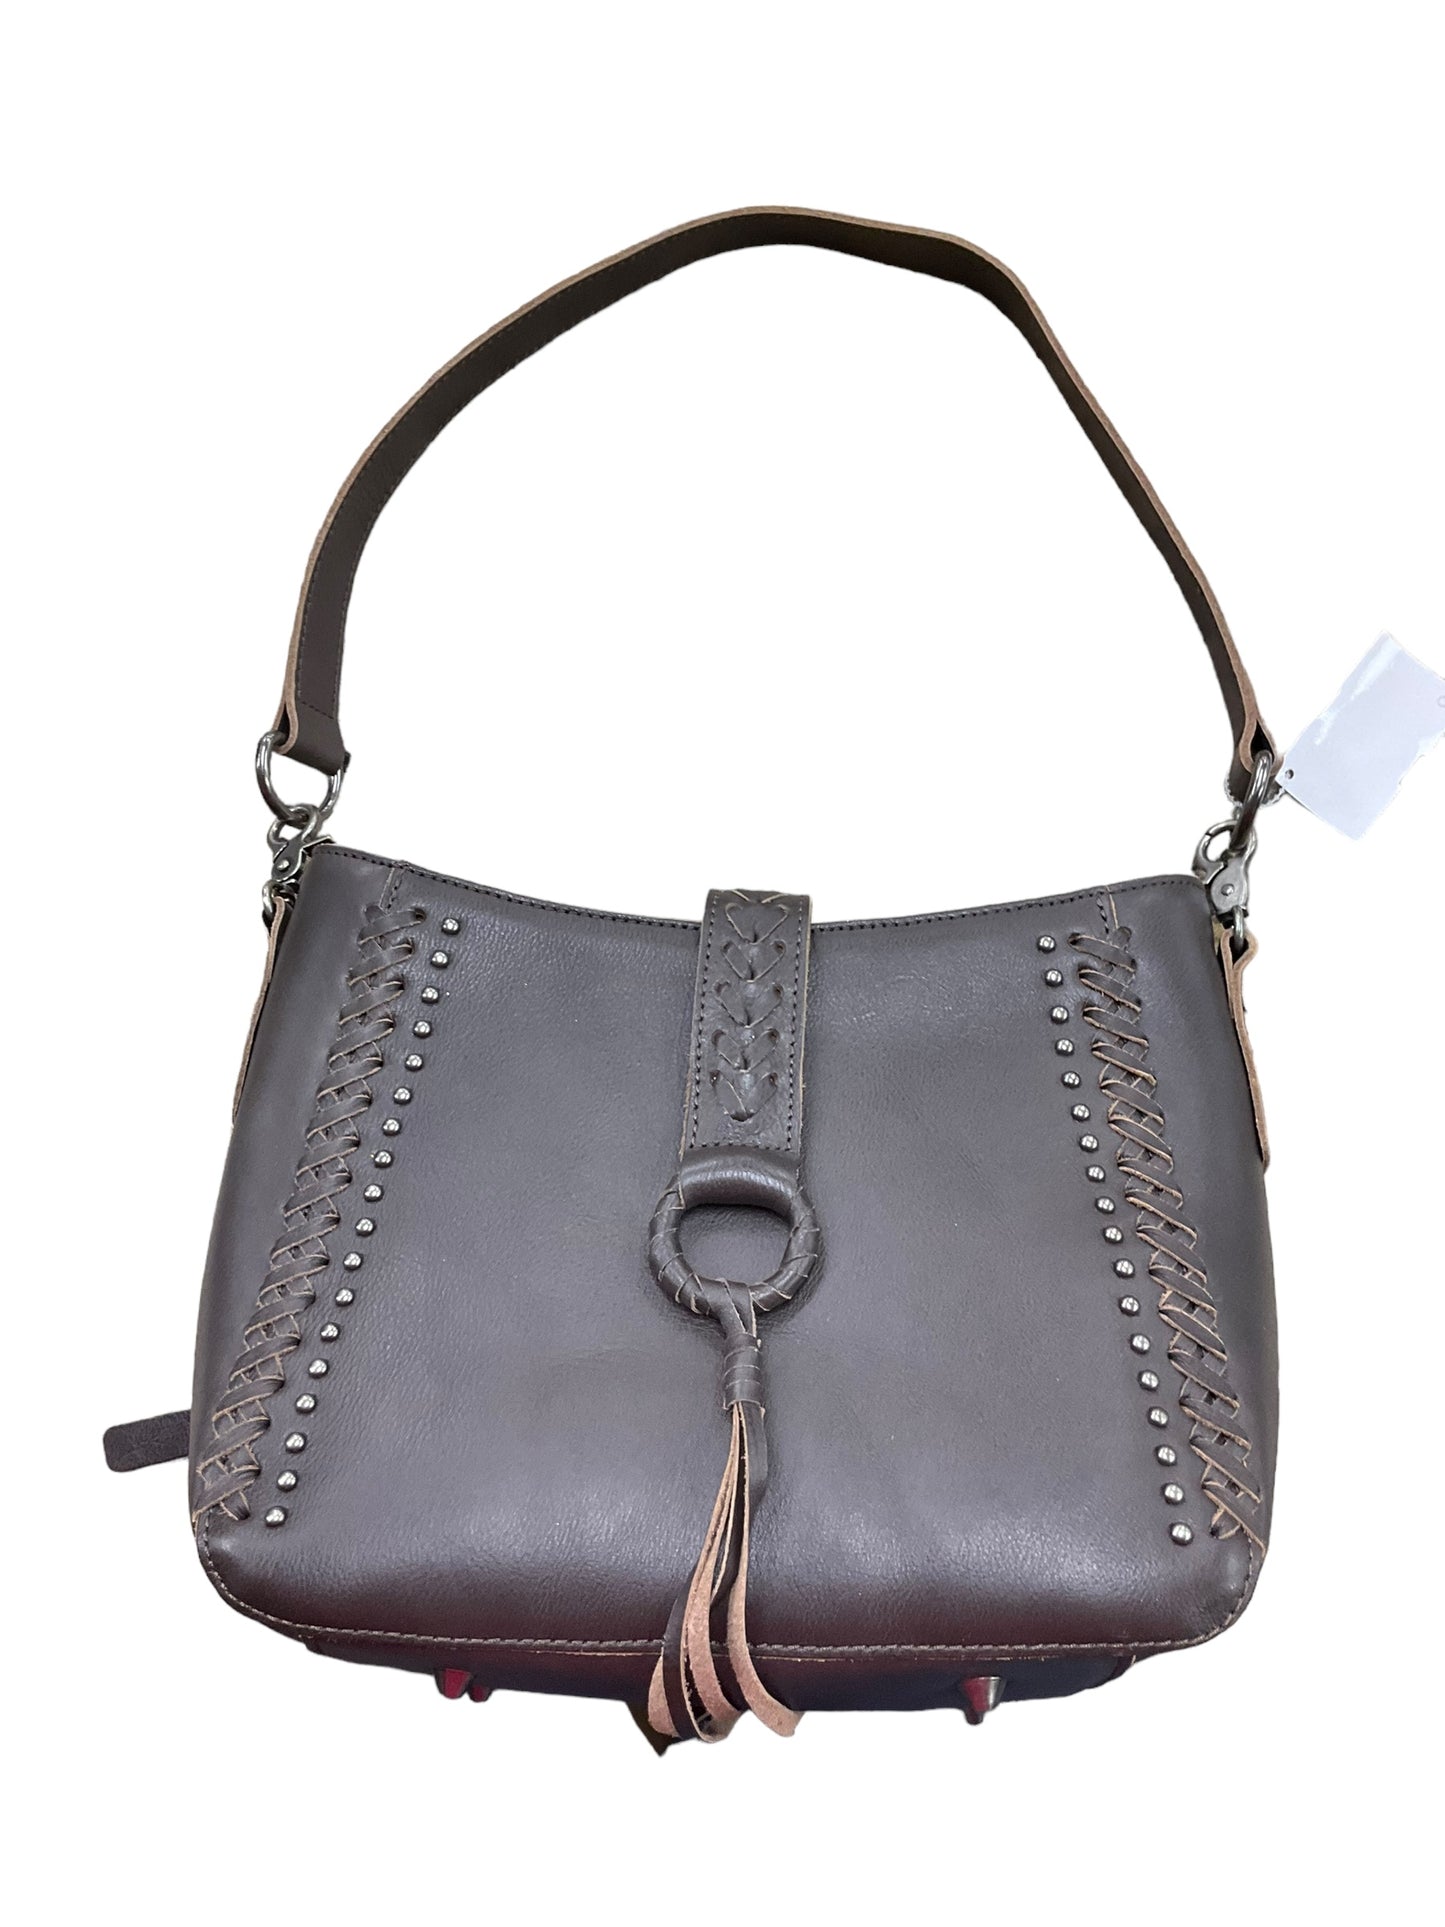 Handbag By Clothes Mentor  Size: Medium